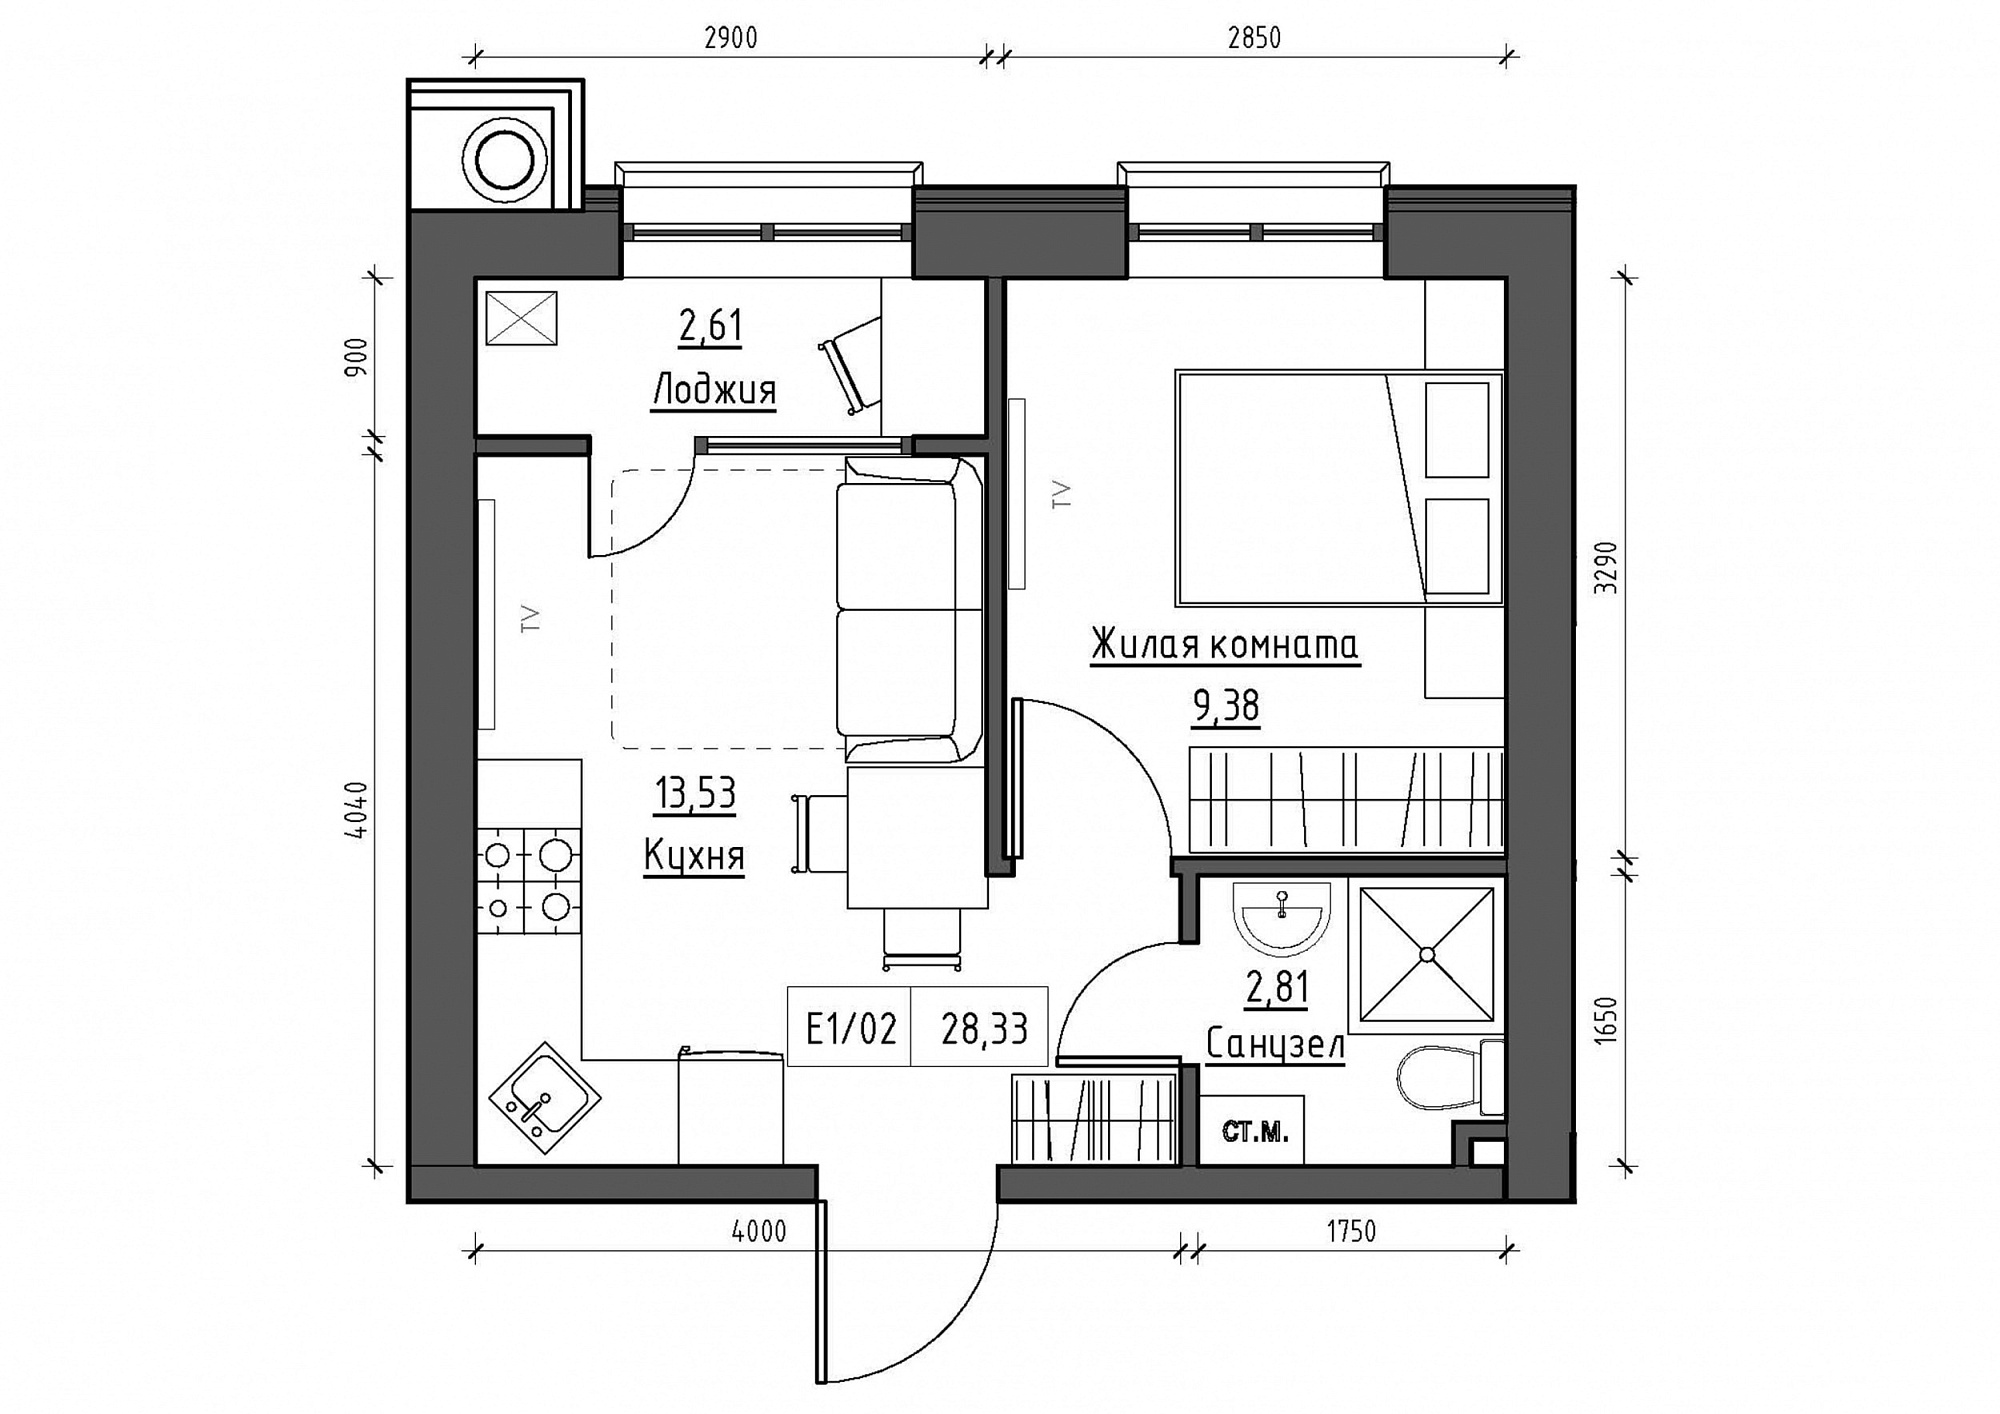 Planning 1-rm flats area 28.33m2, KS-011-04/0015.